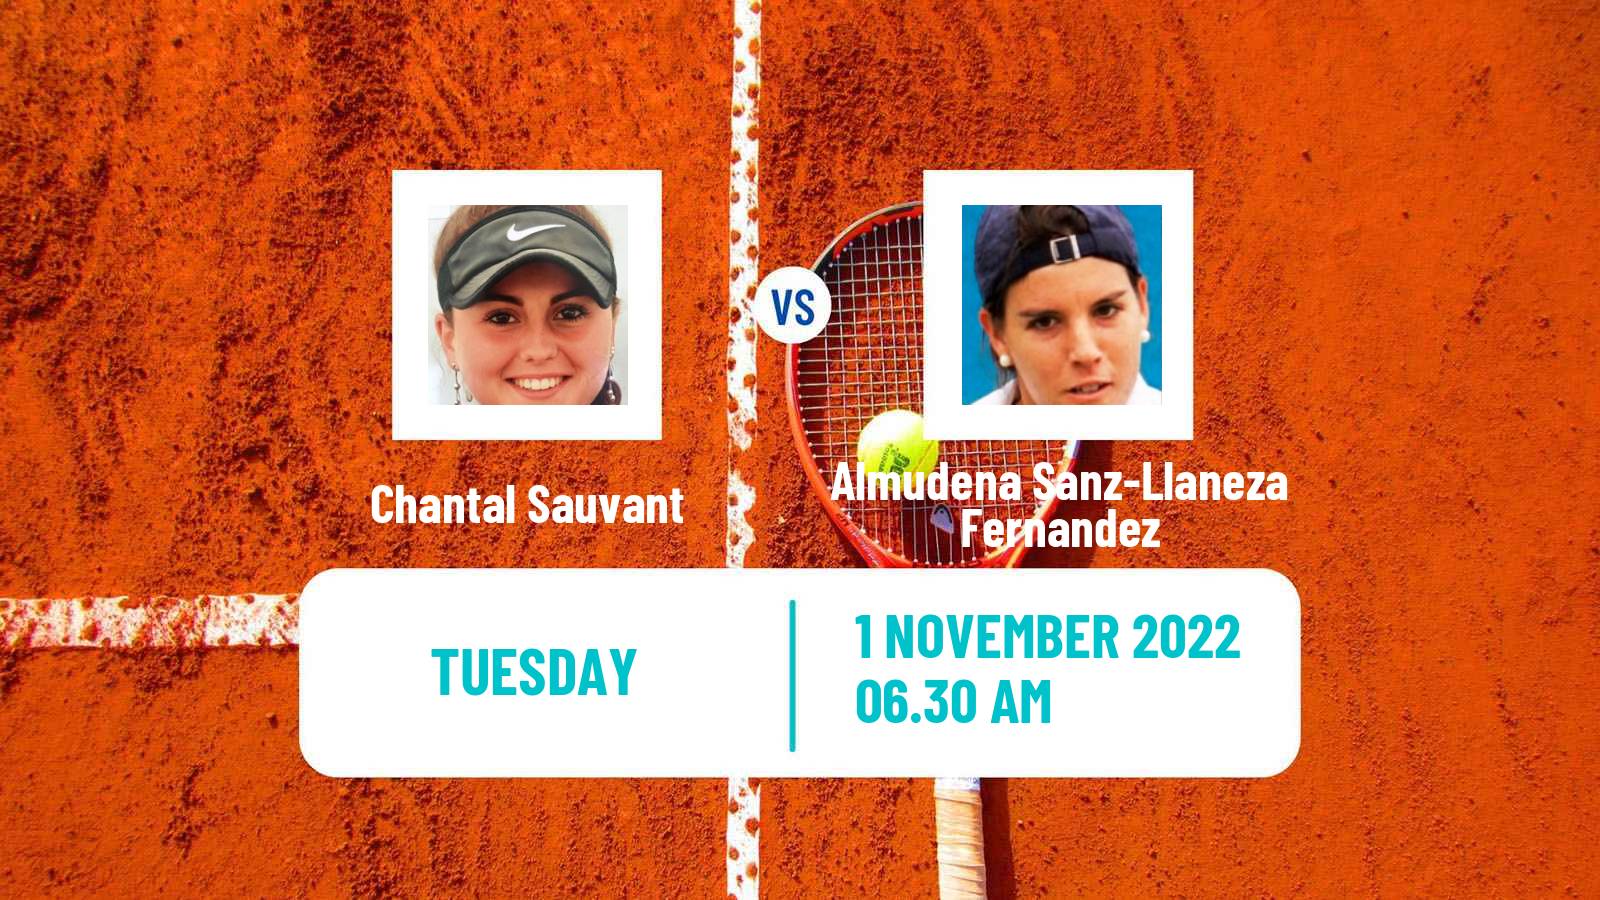 Tennis ITF Tournaments Chantal Sauvant - Almudena Sanz-Llaneza Fernandez